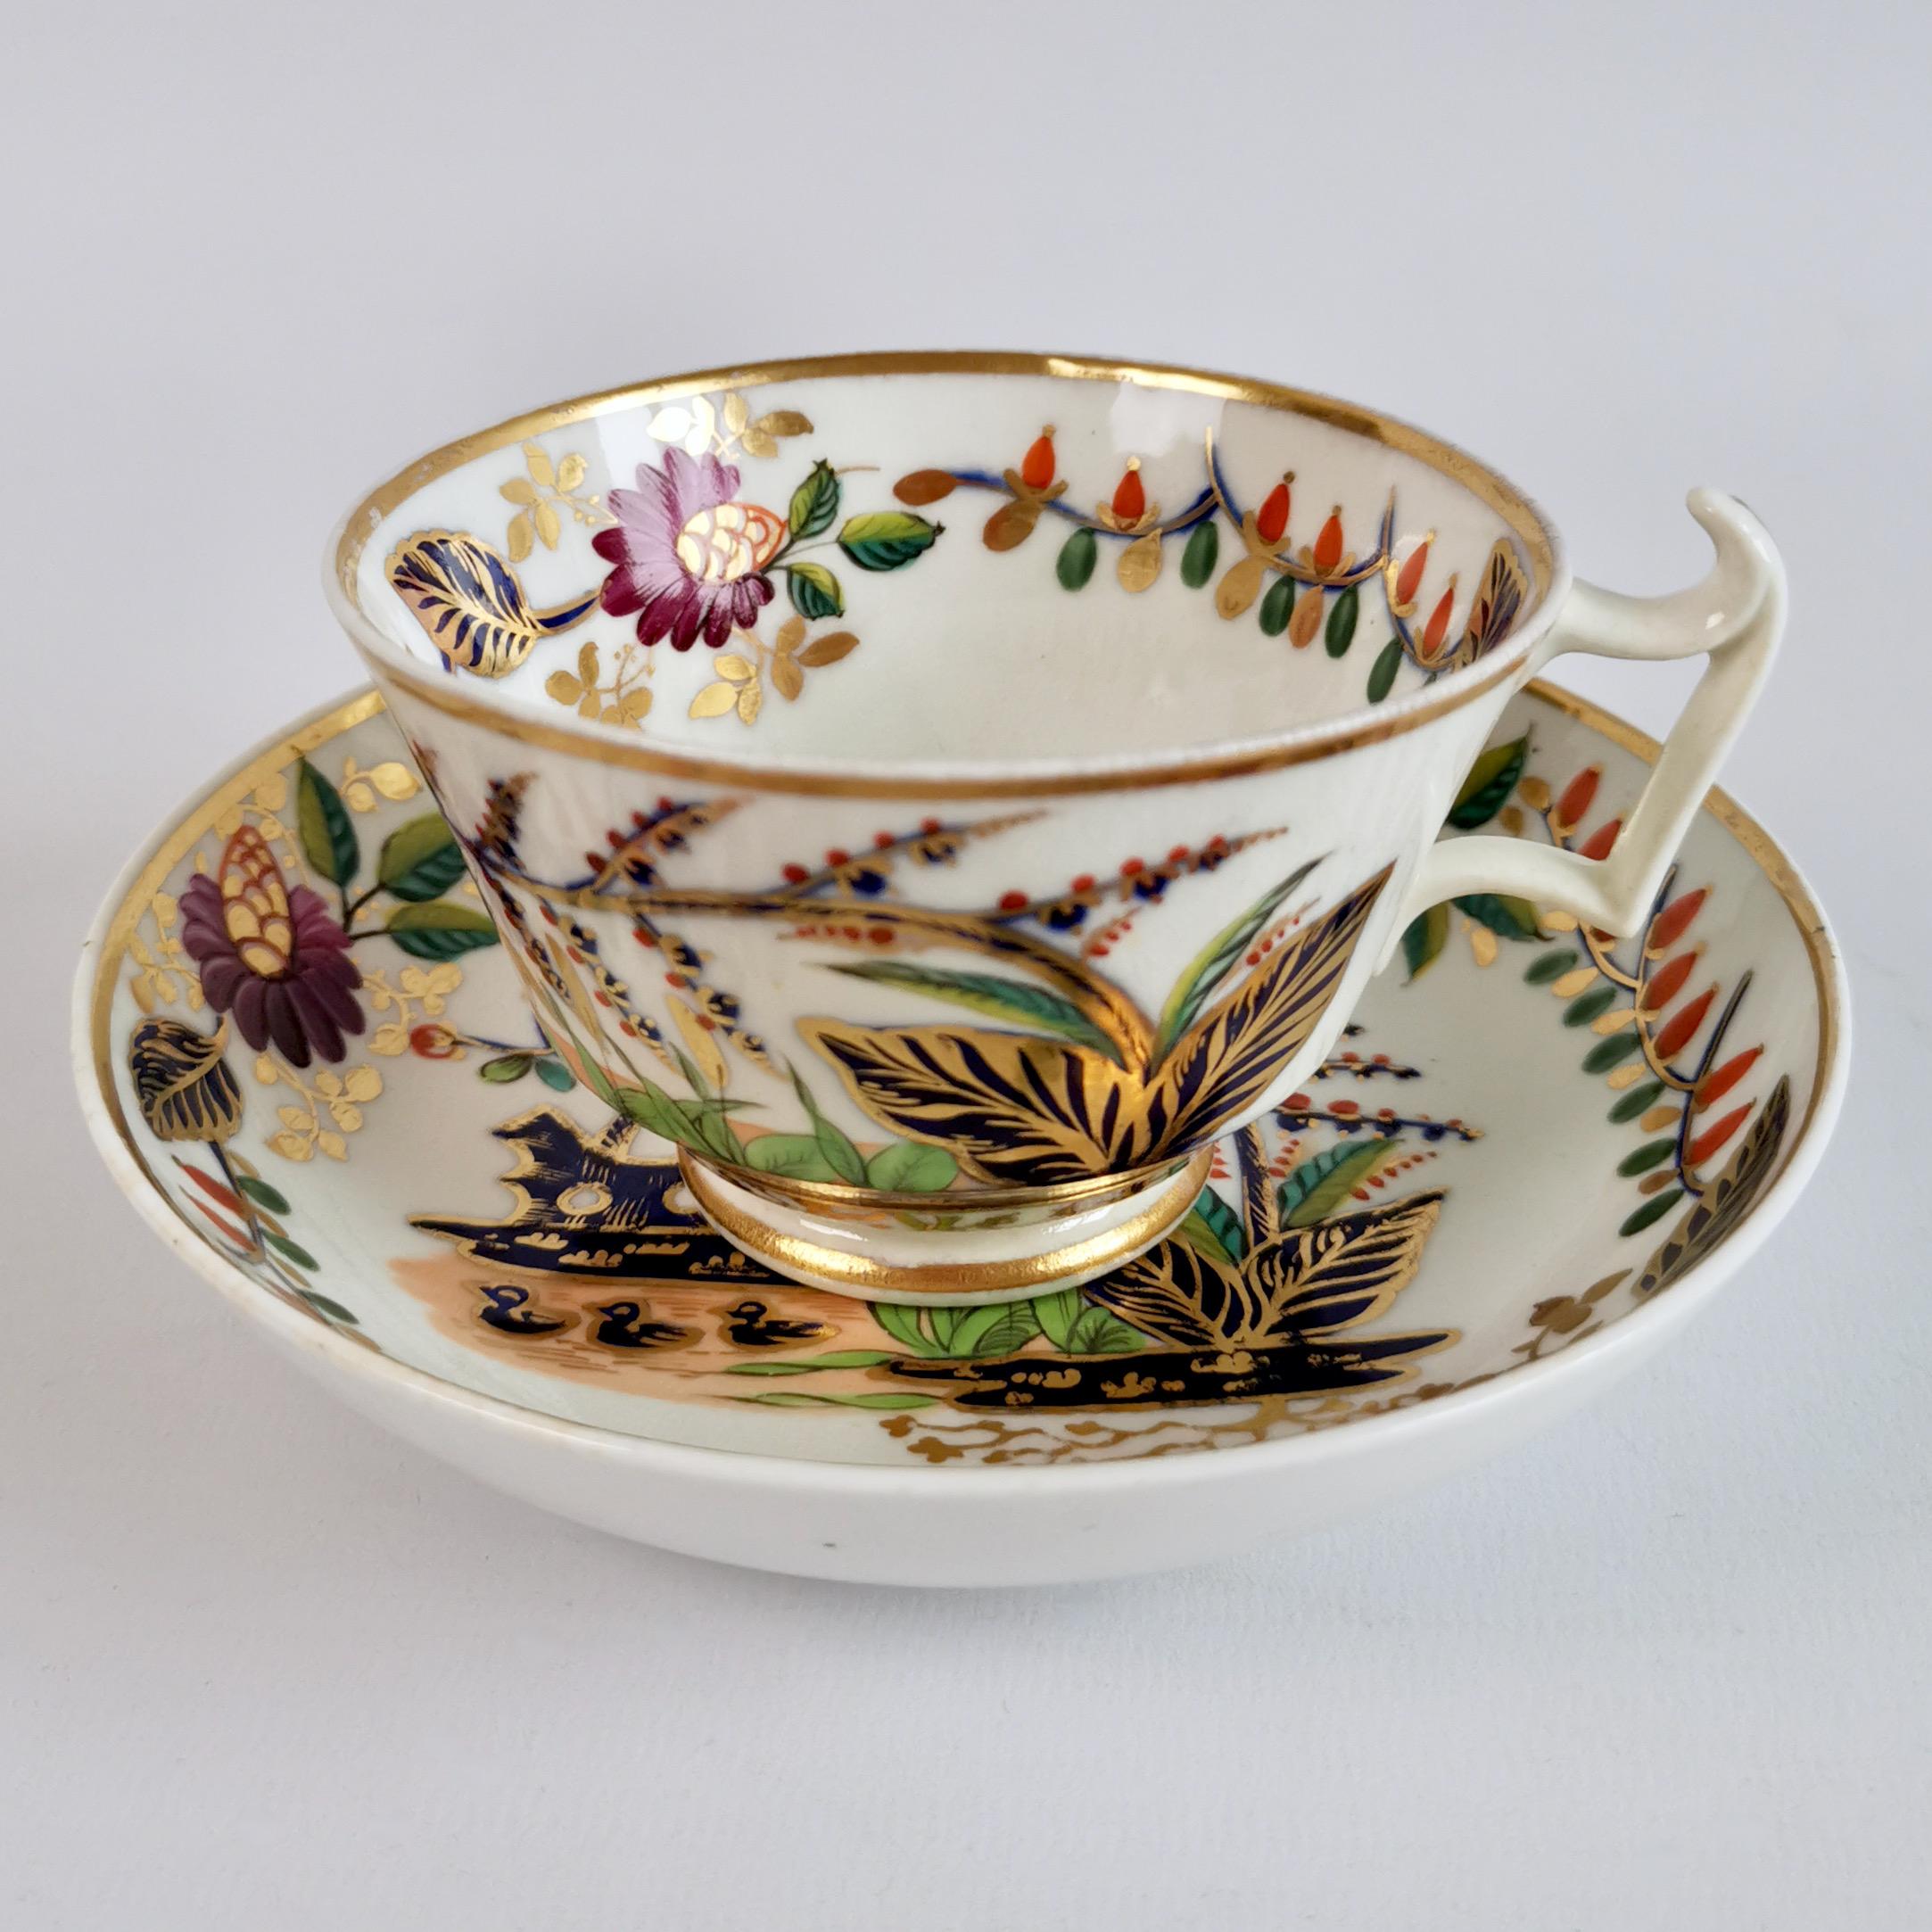 English Derby Porcelain Teacup, Japan Pattern with Ducks, Regency, 1815-1820